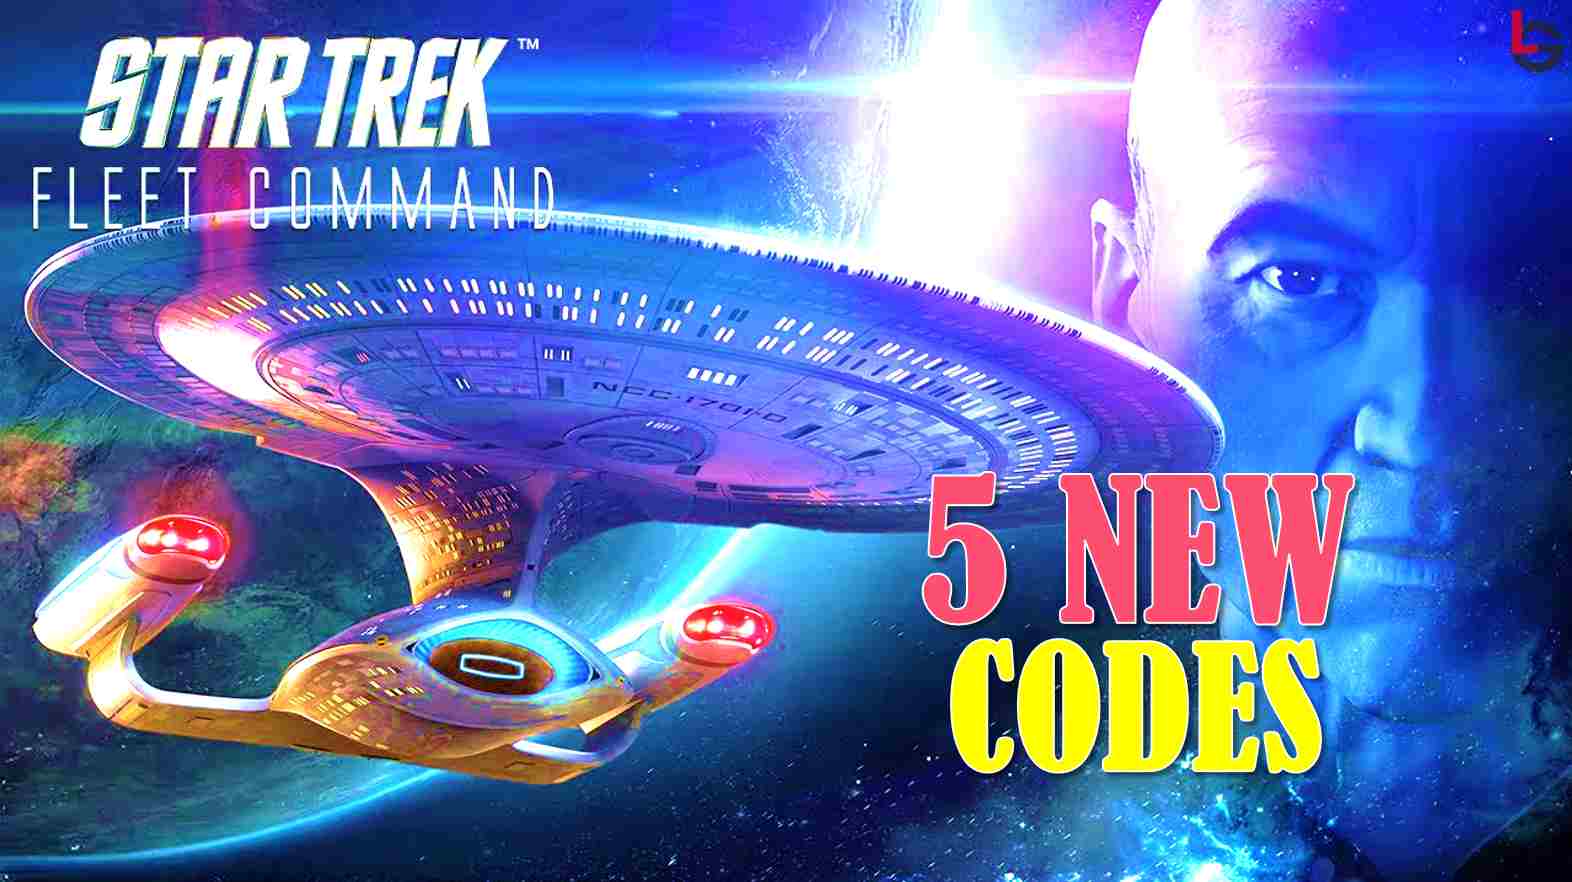 Star Trek Fleet Command Promo Codes